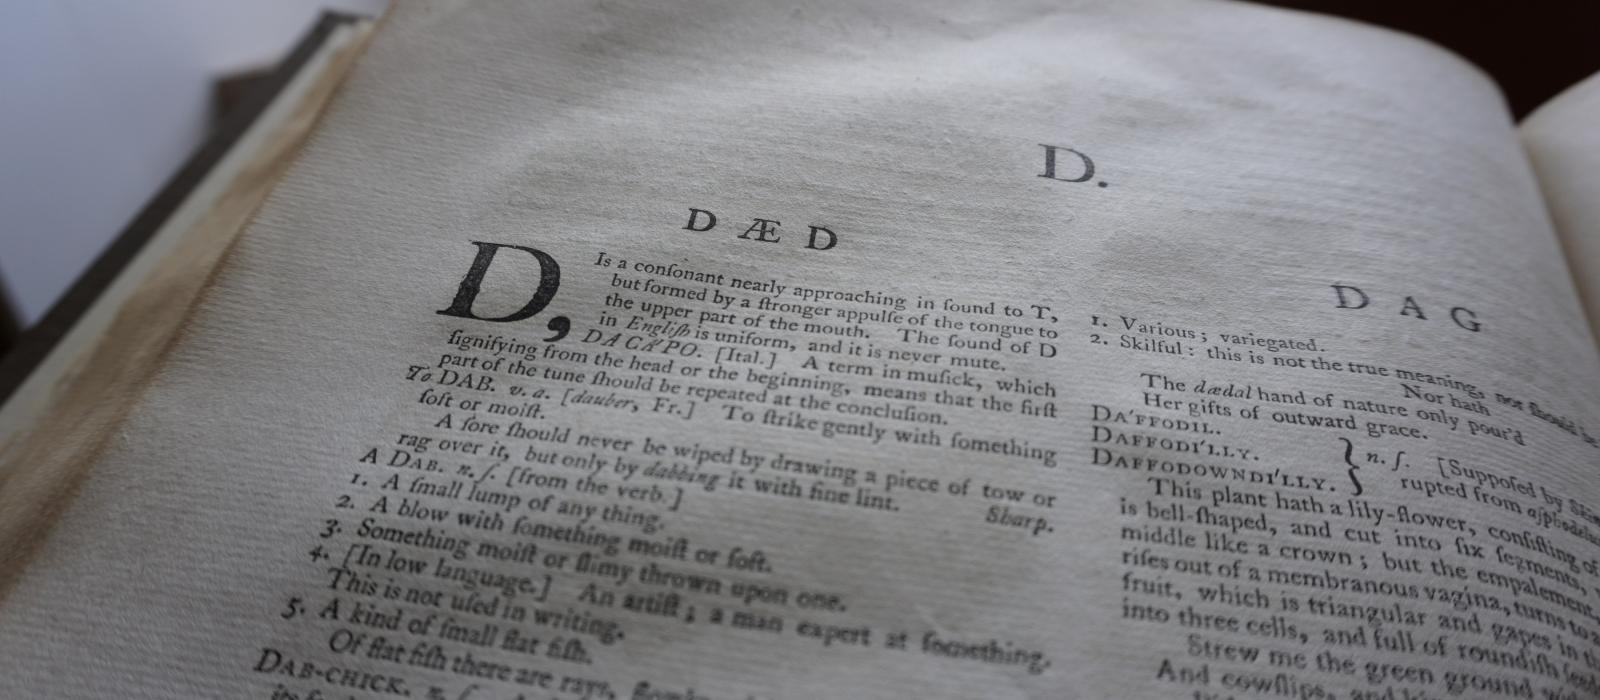 Samuel Johnson's Dictionary, LMH library copy